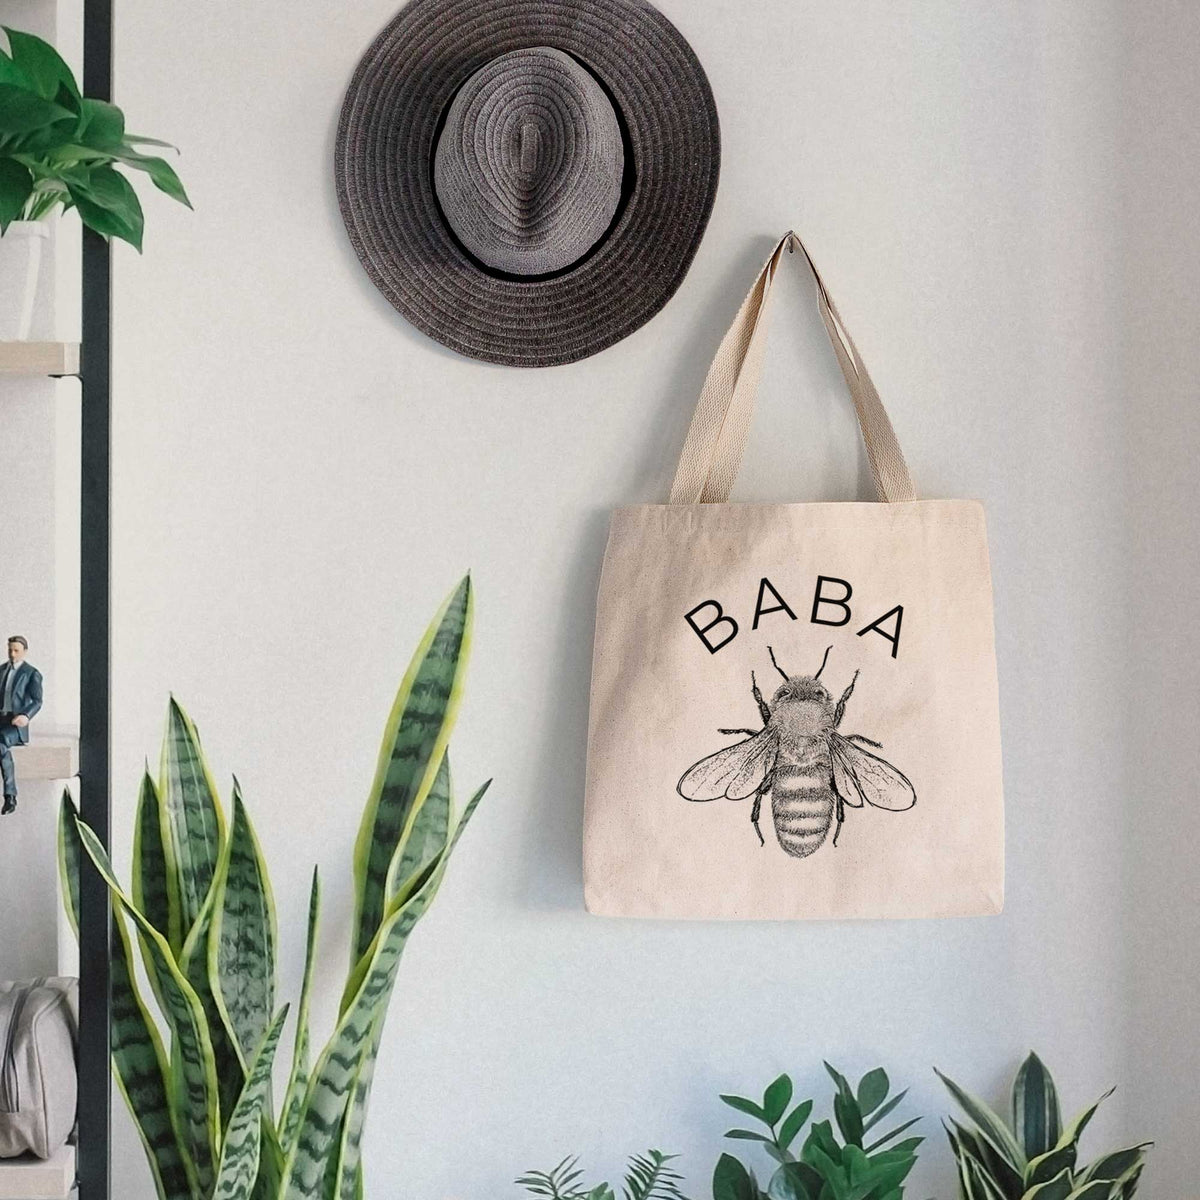 Baba Bee - Tote Bag